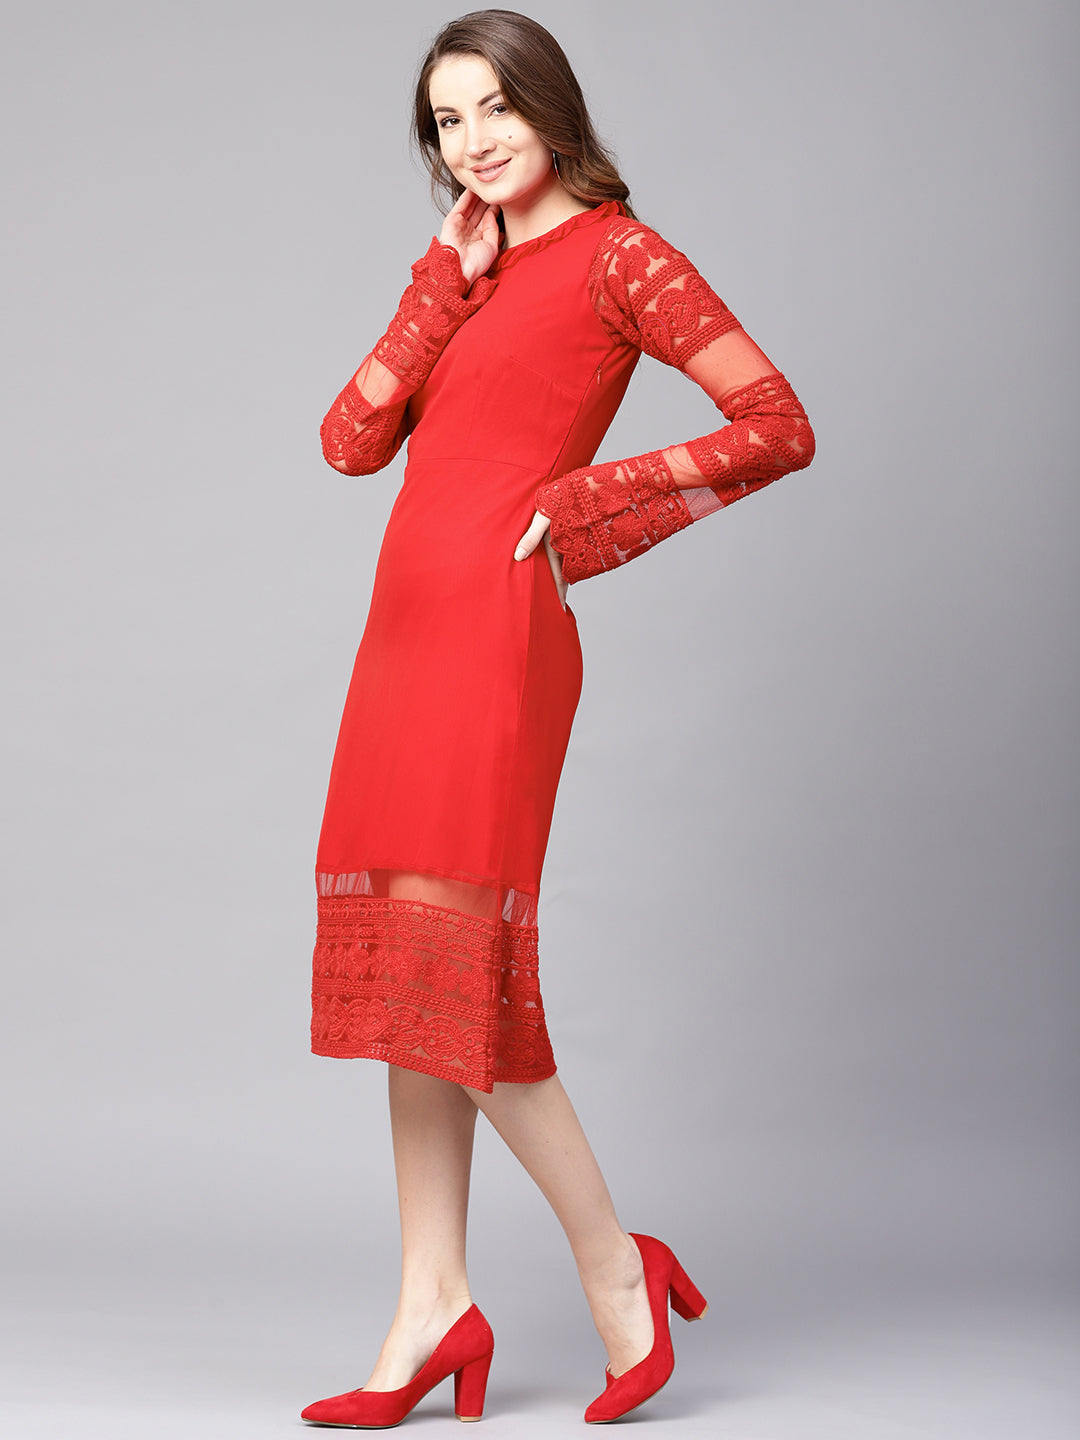 Athena Women Red Solid Lace Detail Sheath Dress - Athena Lifestyle